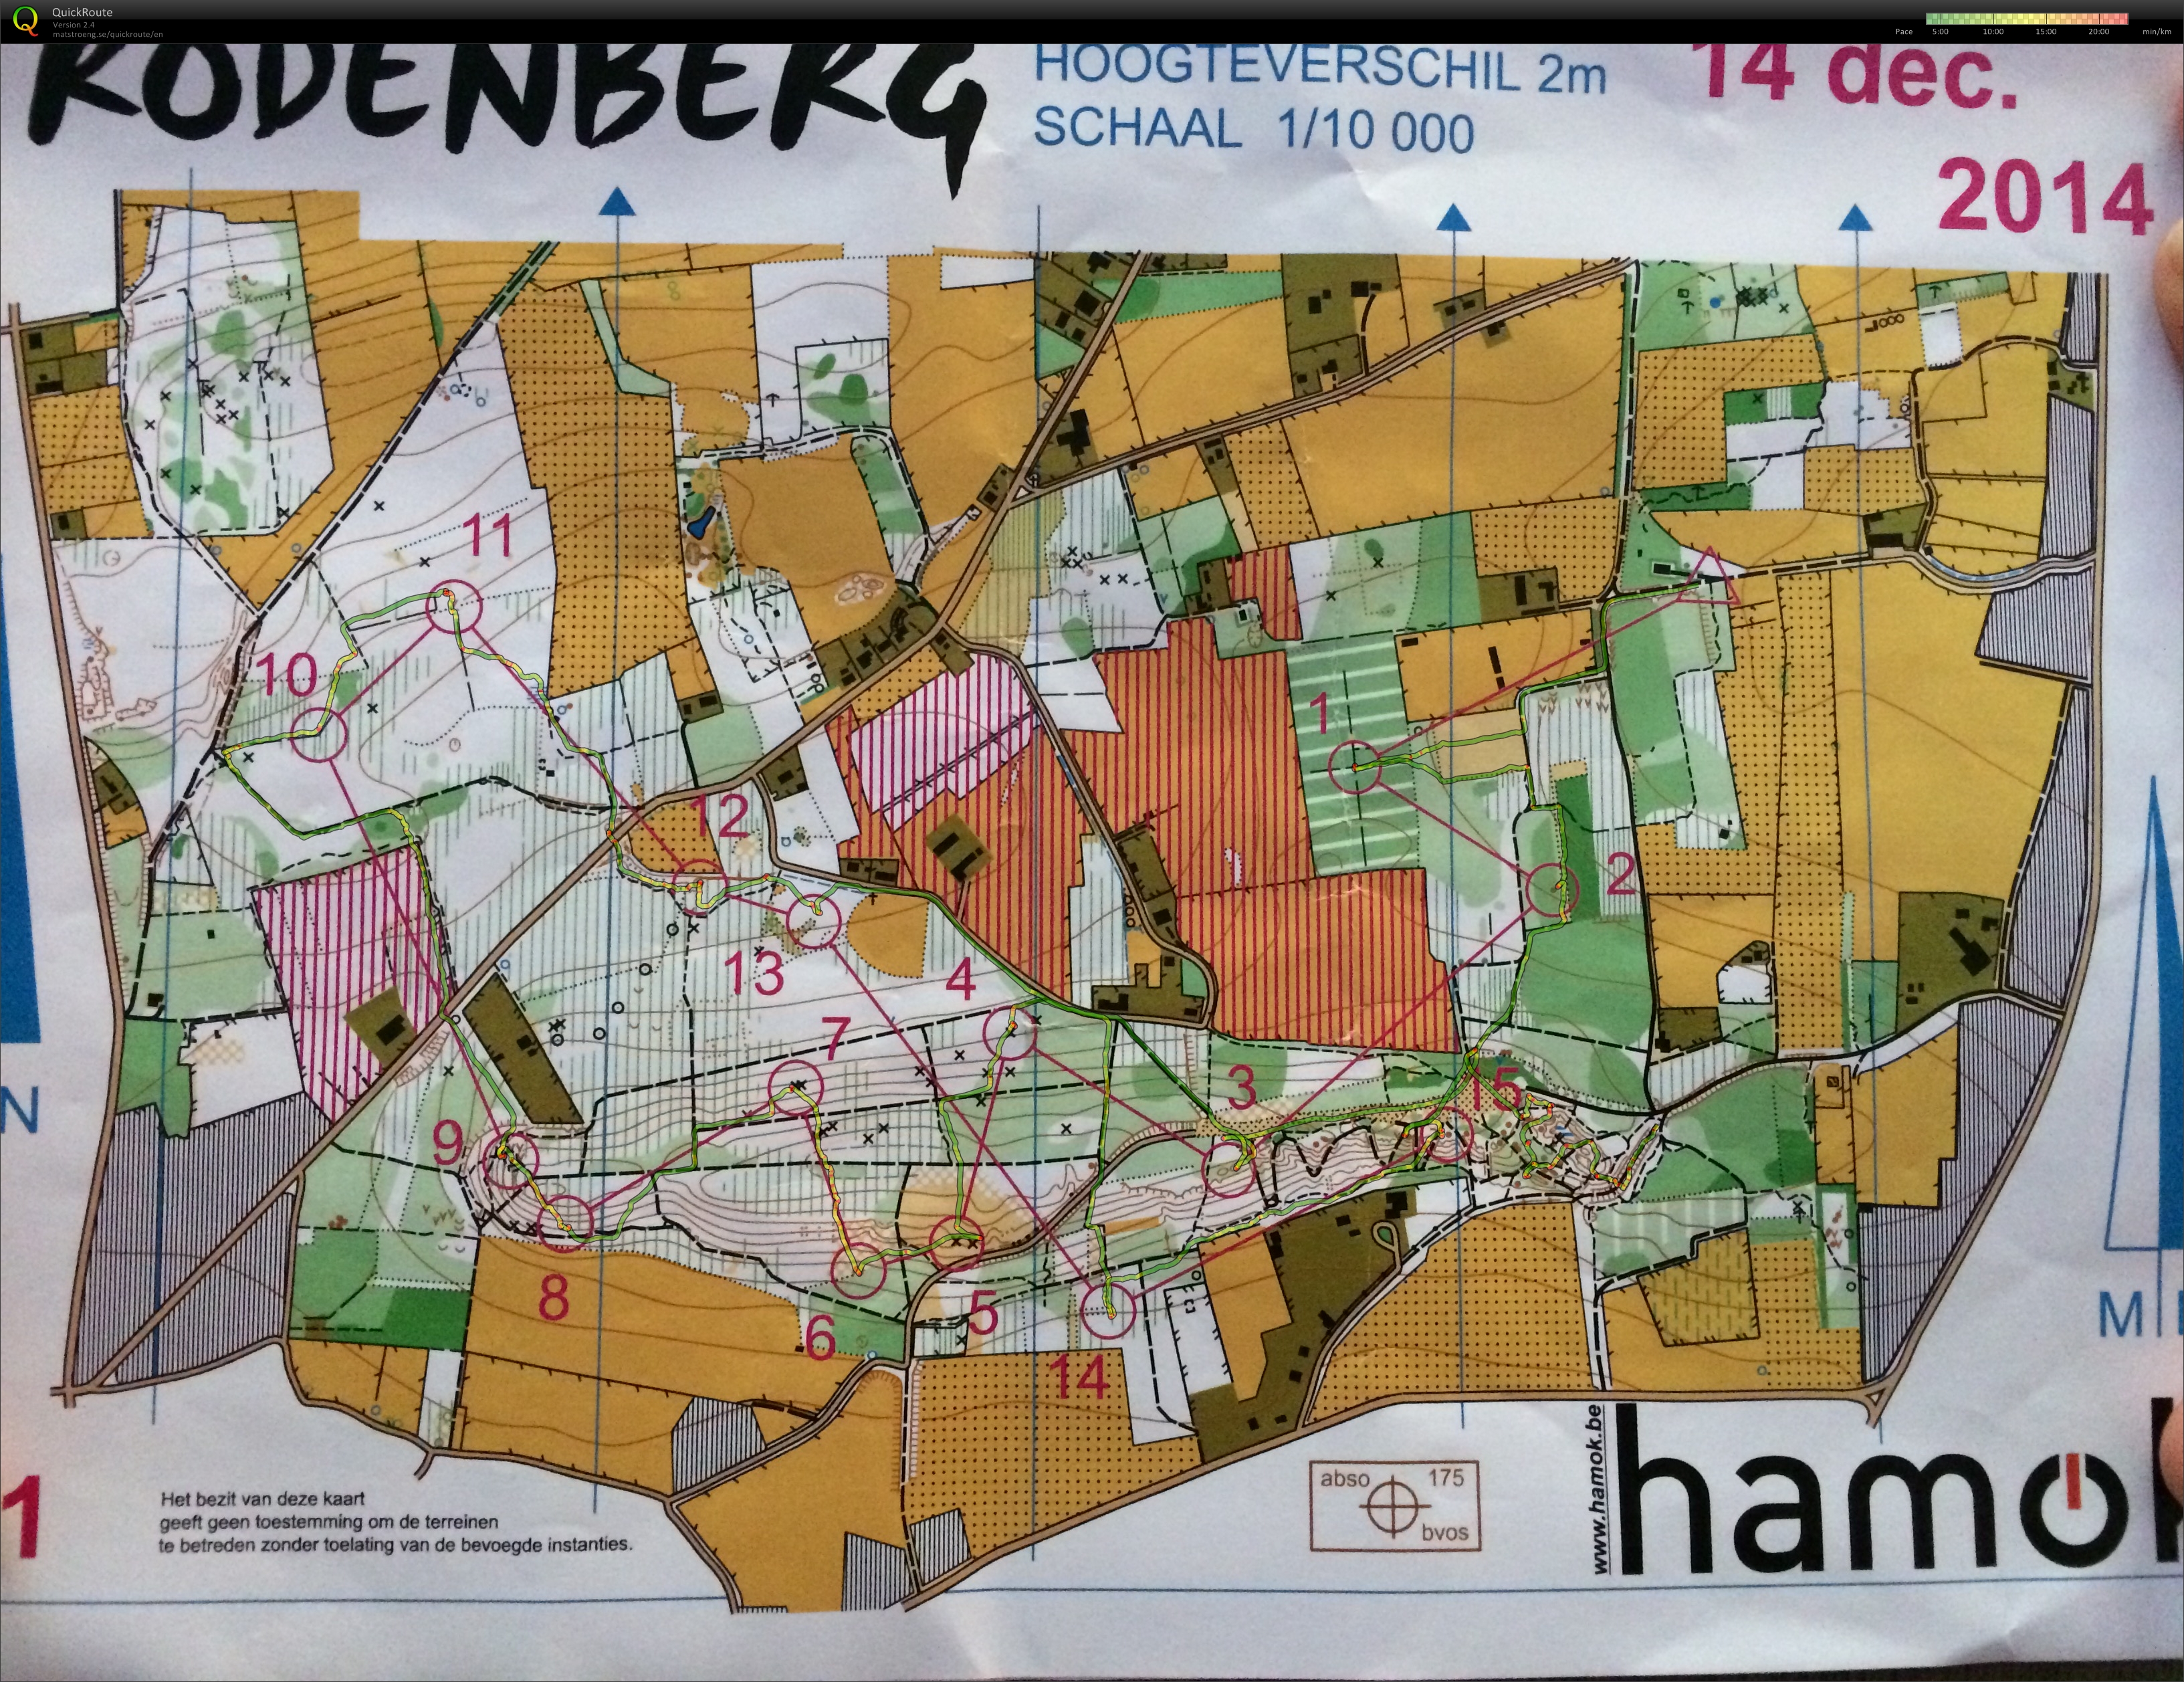 Rodenberg (2014-12-14)